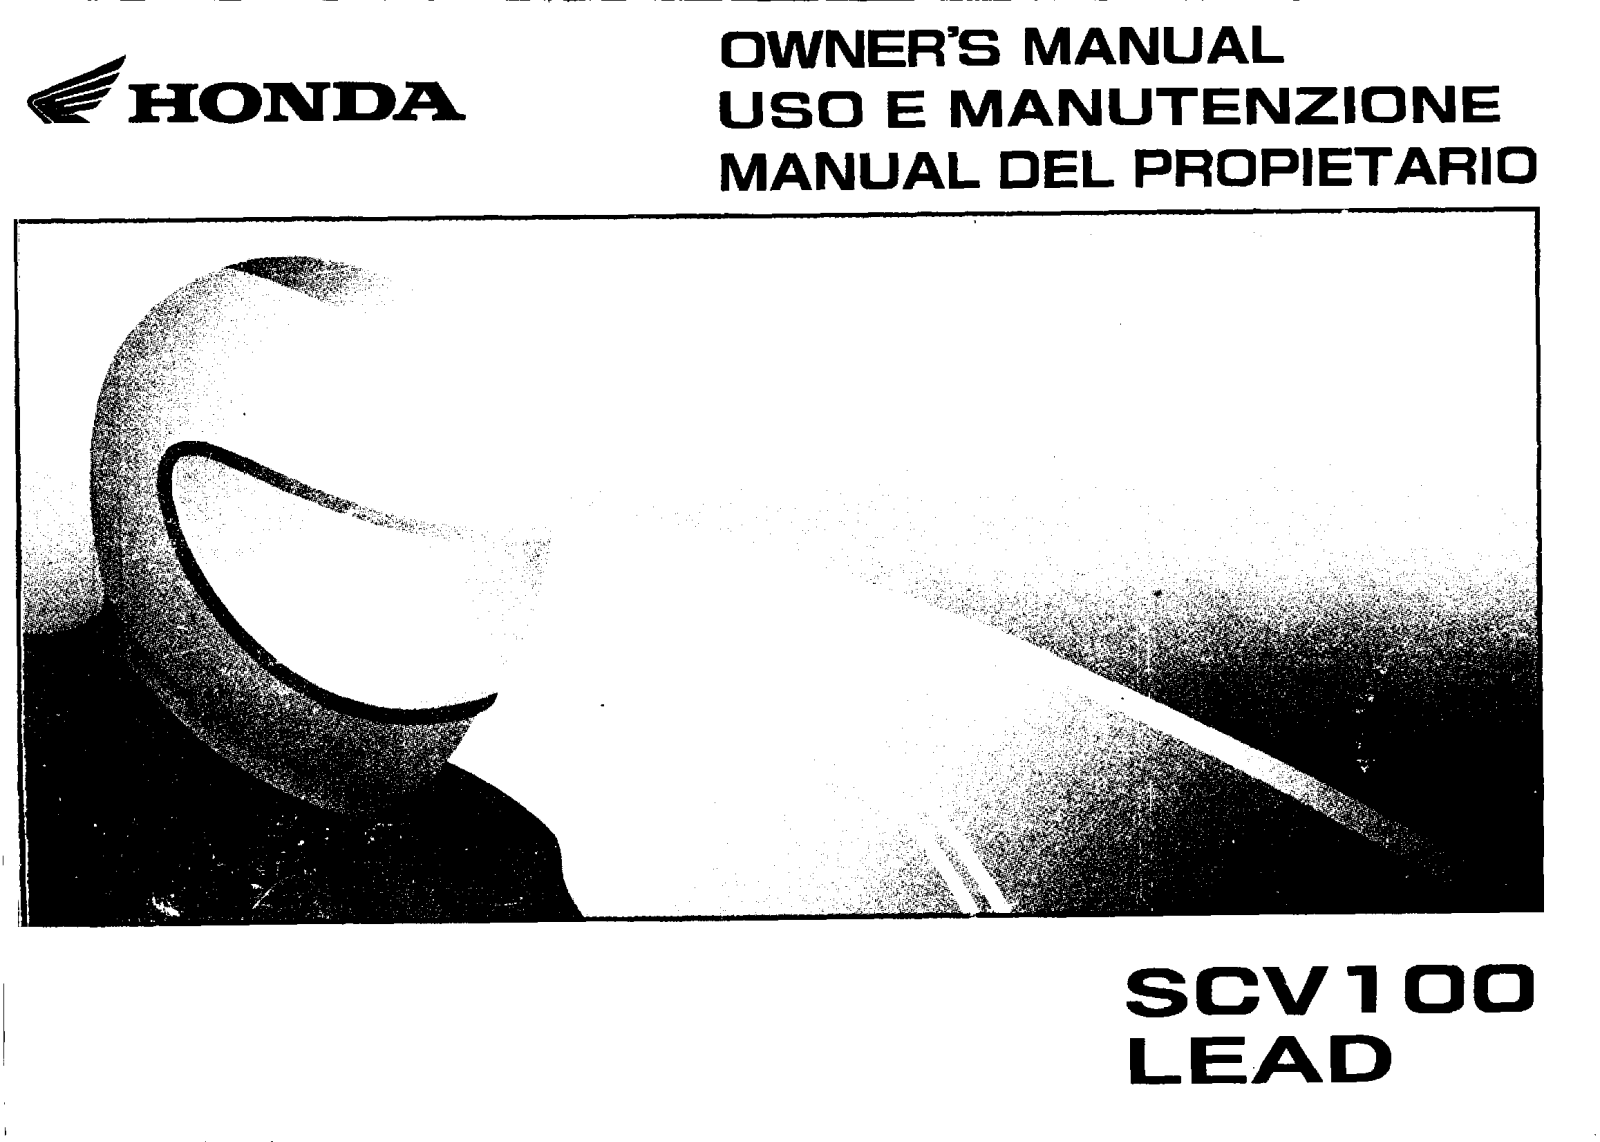 Honda SCV100LEAD Owner's Manual